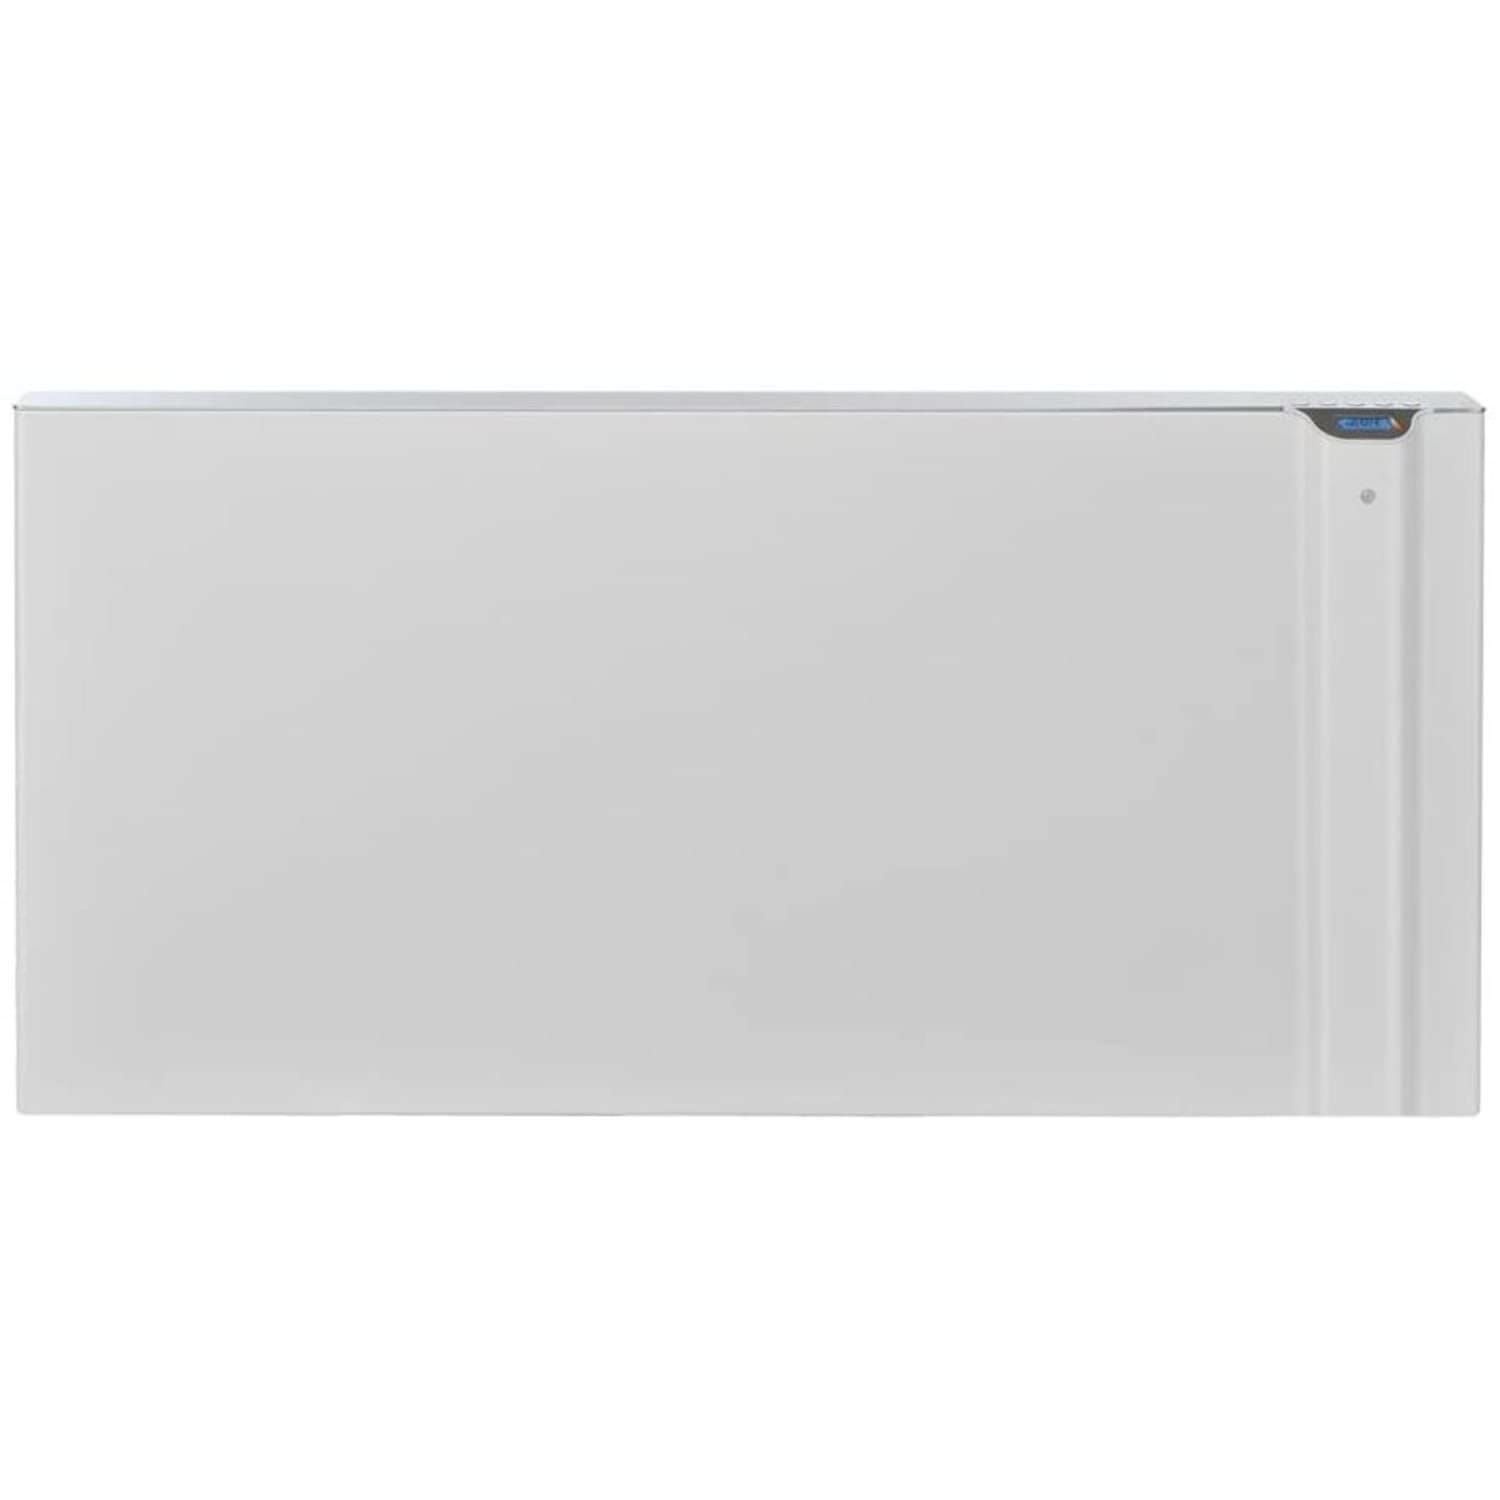 White wifi wall mounted radiator